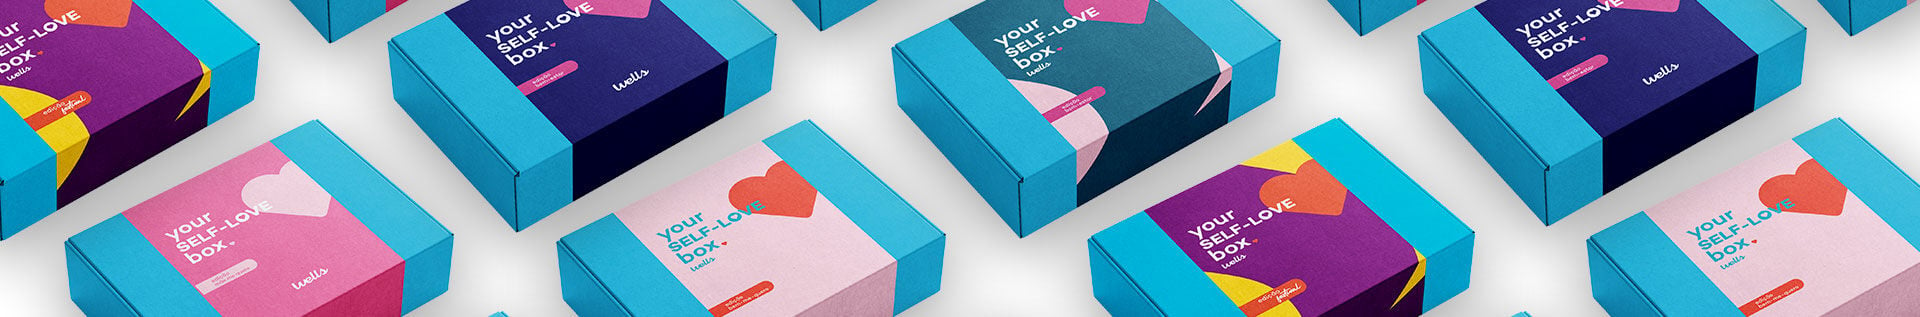 Self-Love Box